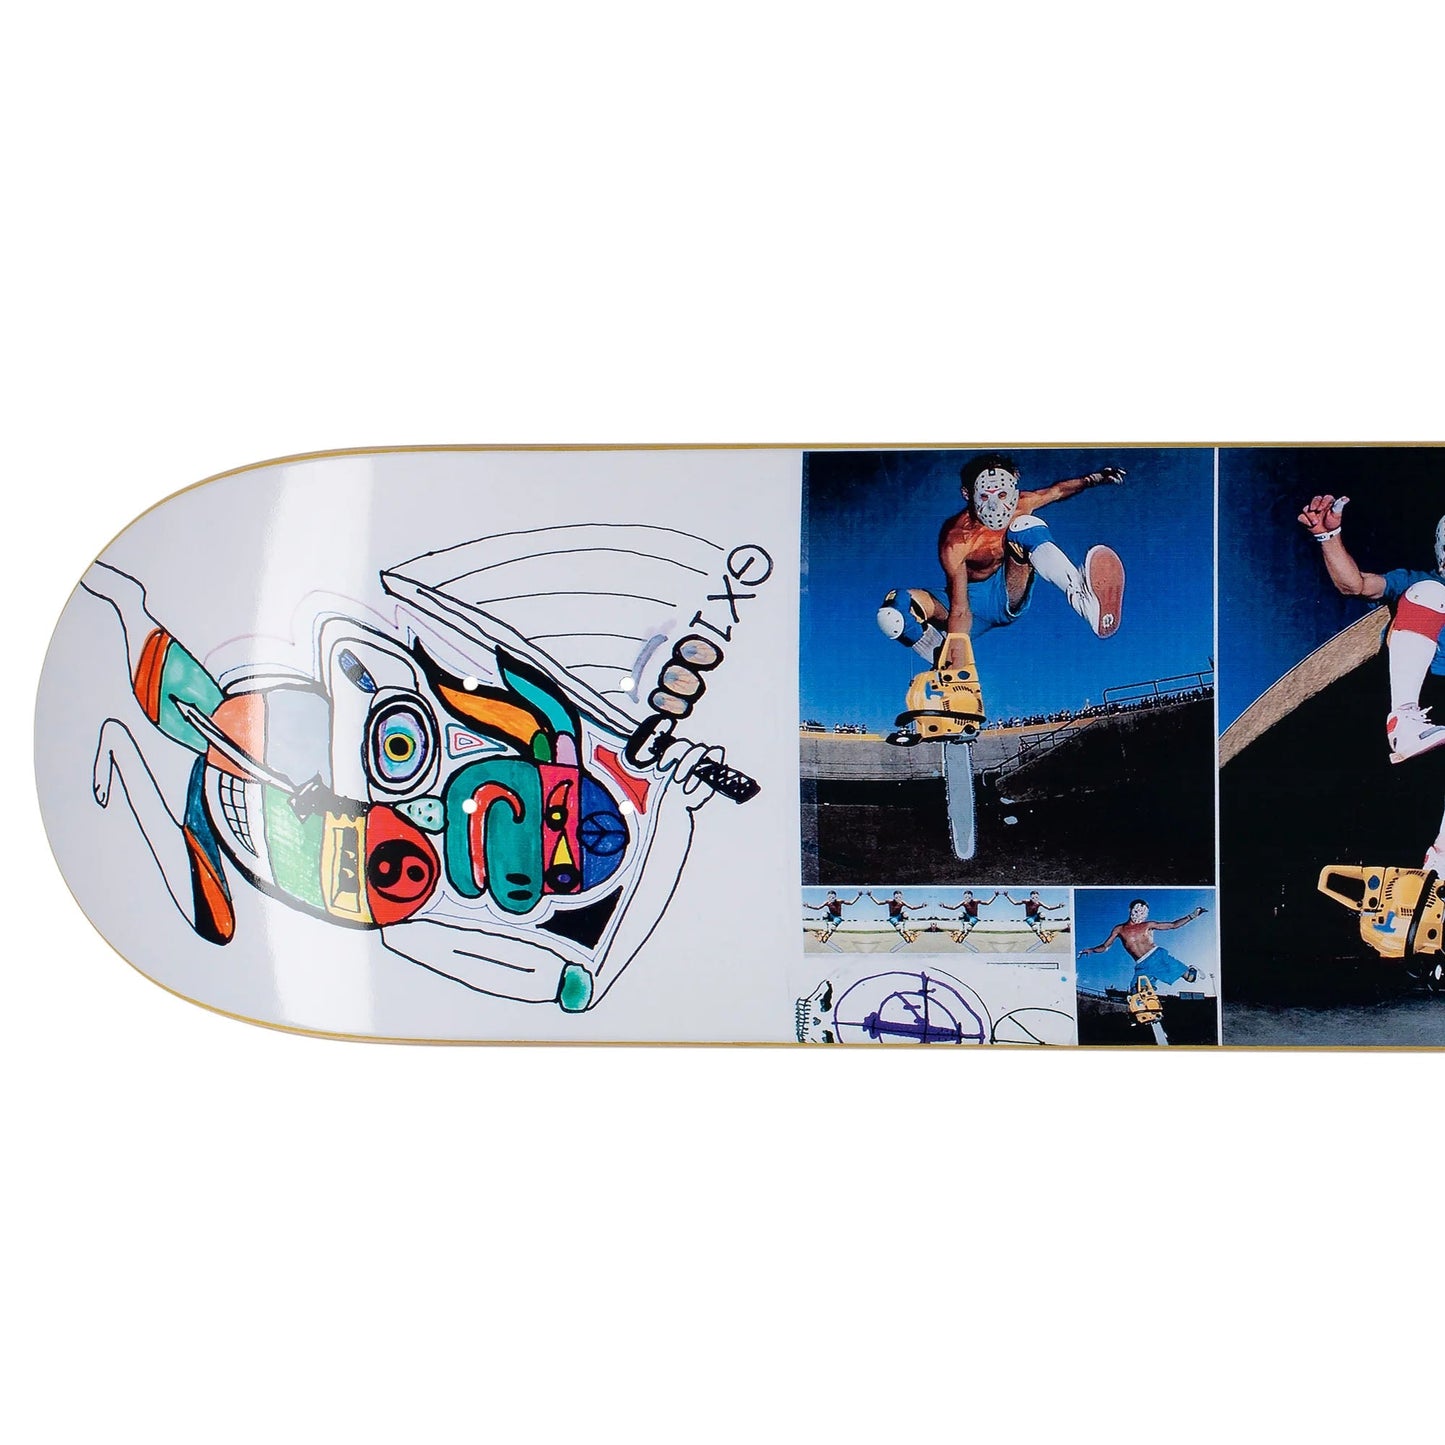 GX1000 Drug Cult Deck (8.5”) - Tiki Room Skateboards - 2